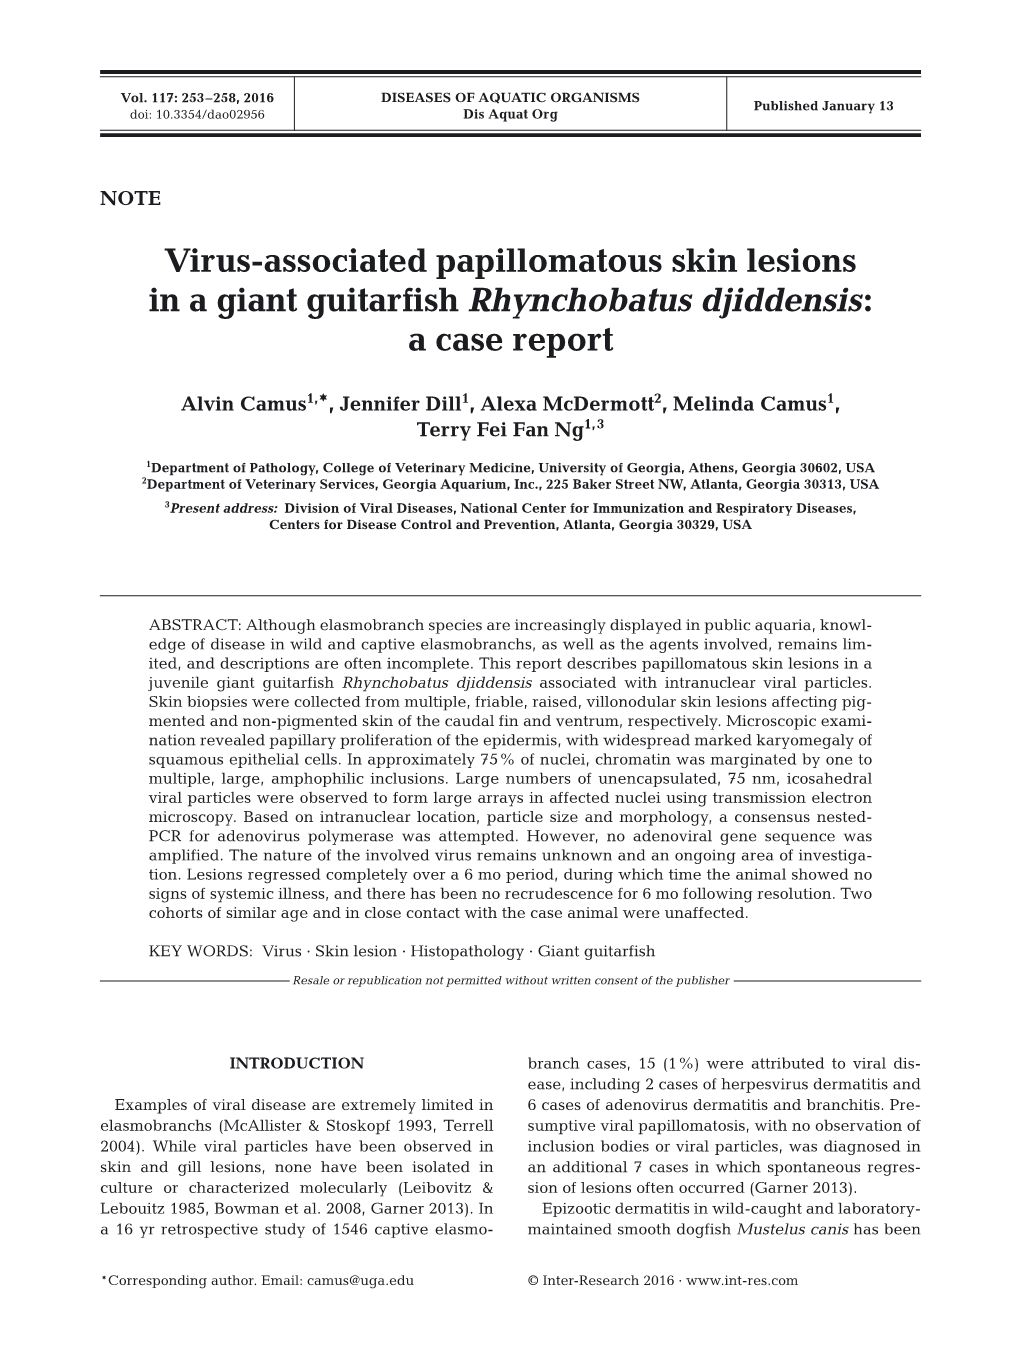 Virus-Associated Papillomatous Skin Lesions in a Giant Guitarfish Rhynchobatus Djiddensis: a Case Report